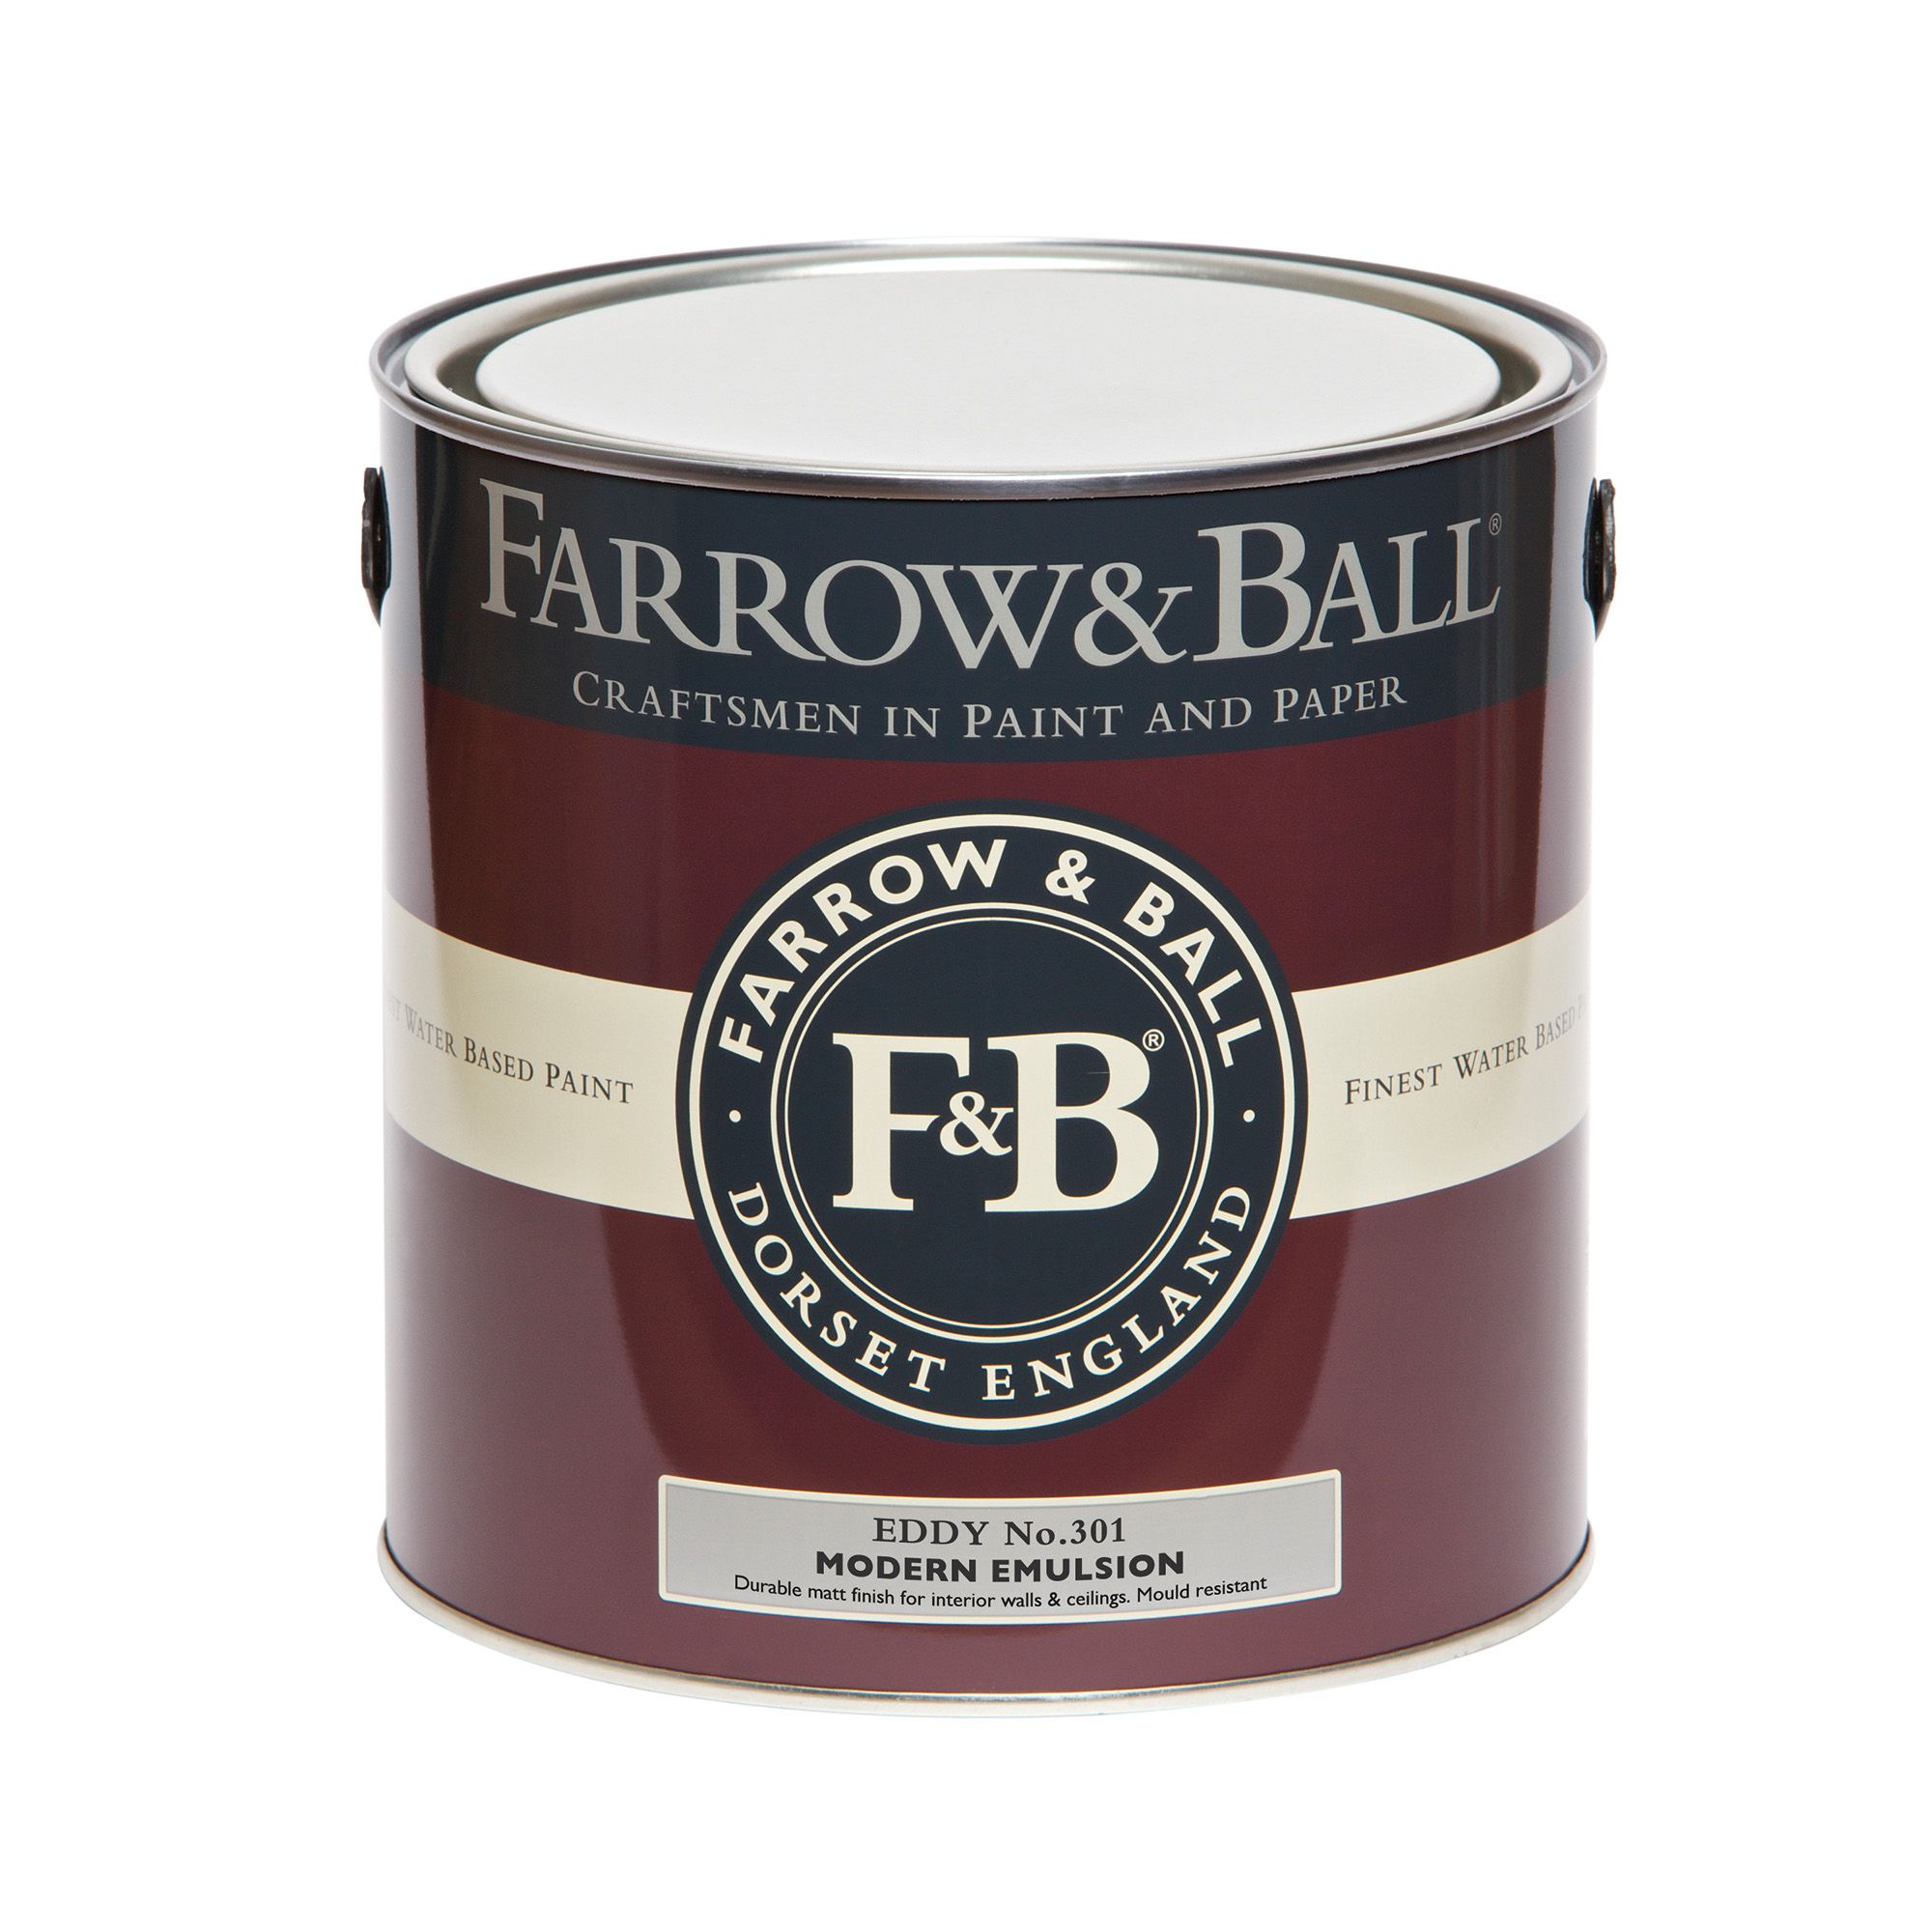 Farrow & Ball Modern Eddy No.301 Matt Emulsion paint, 2.5L